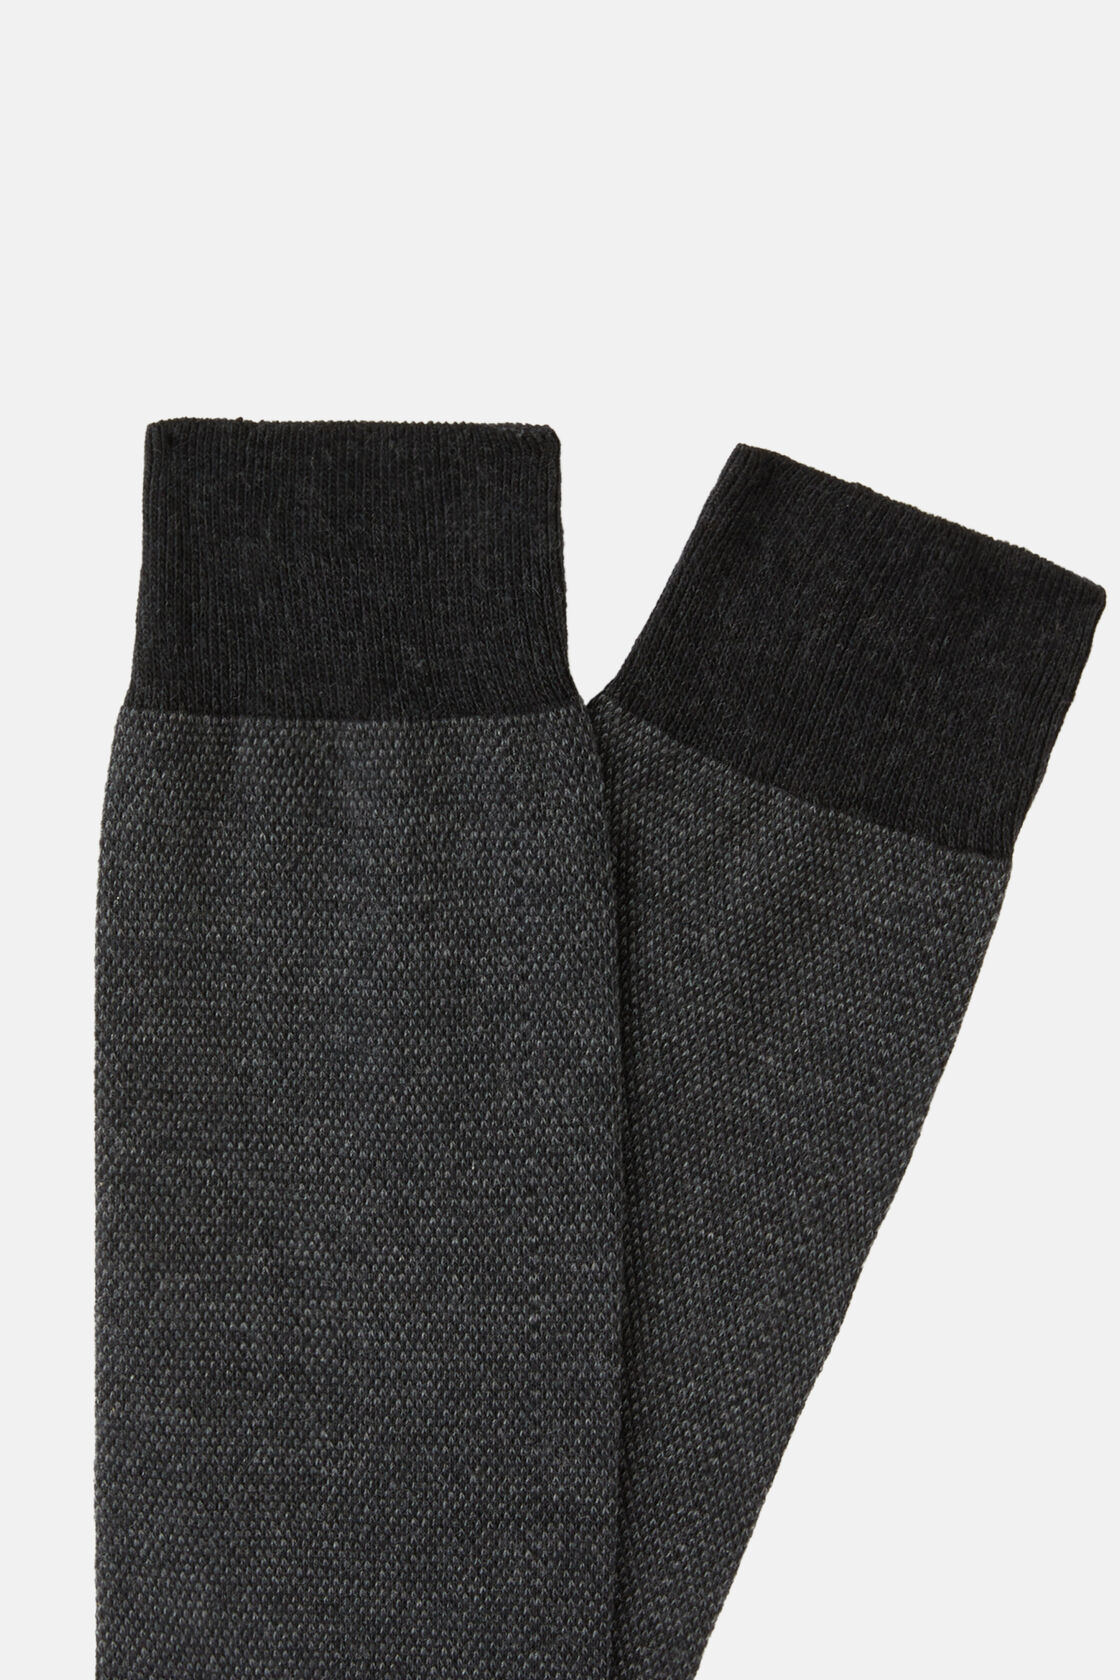 Organic Cotton Oxford Socks, Grey, hi-res